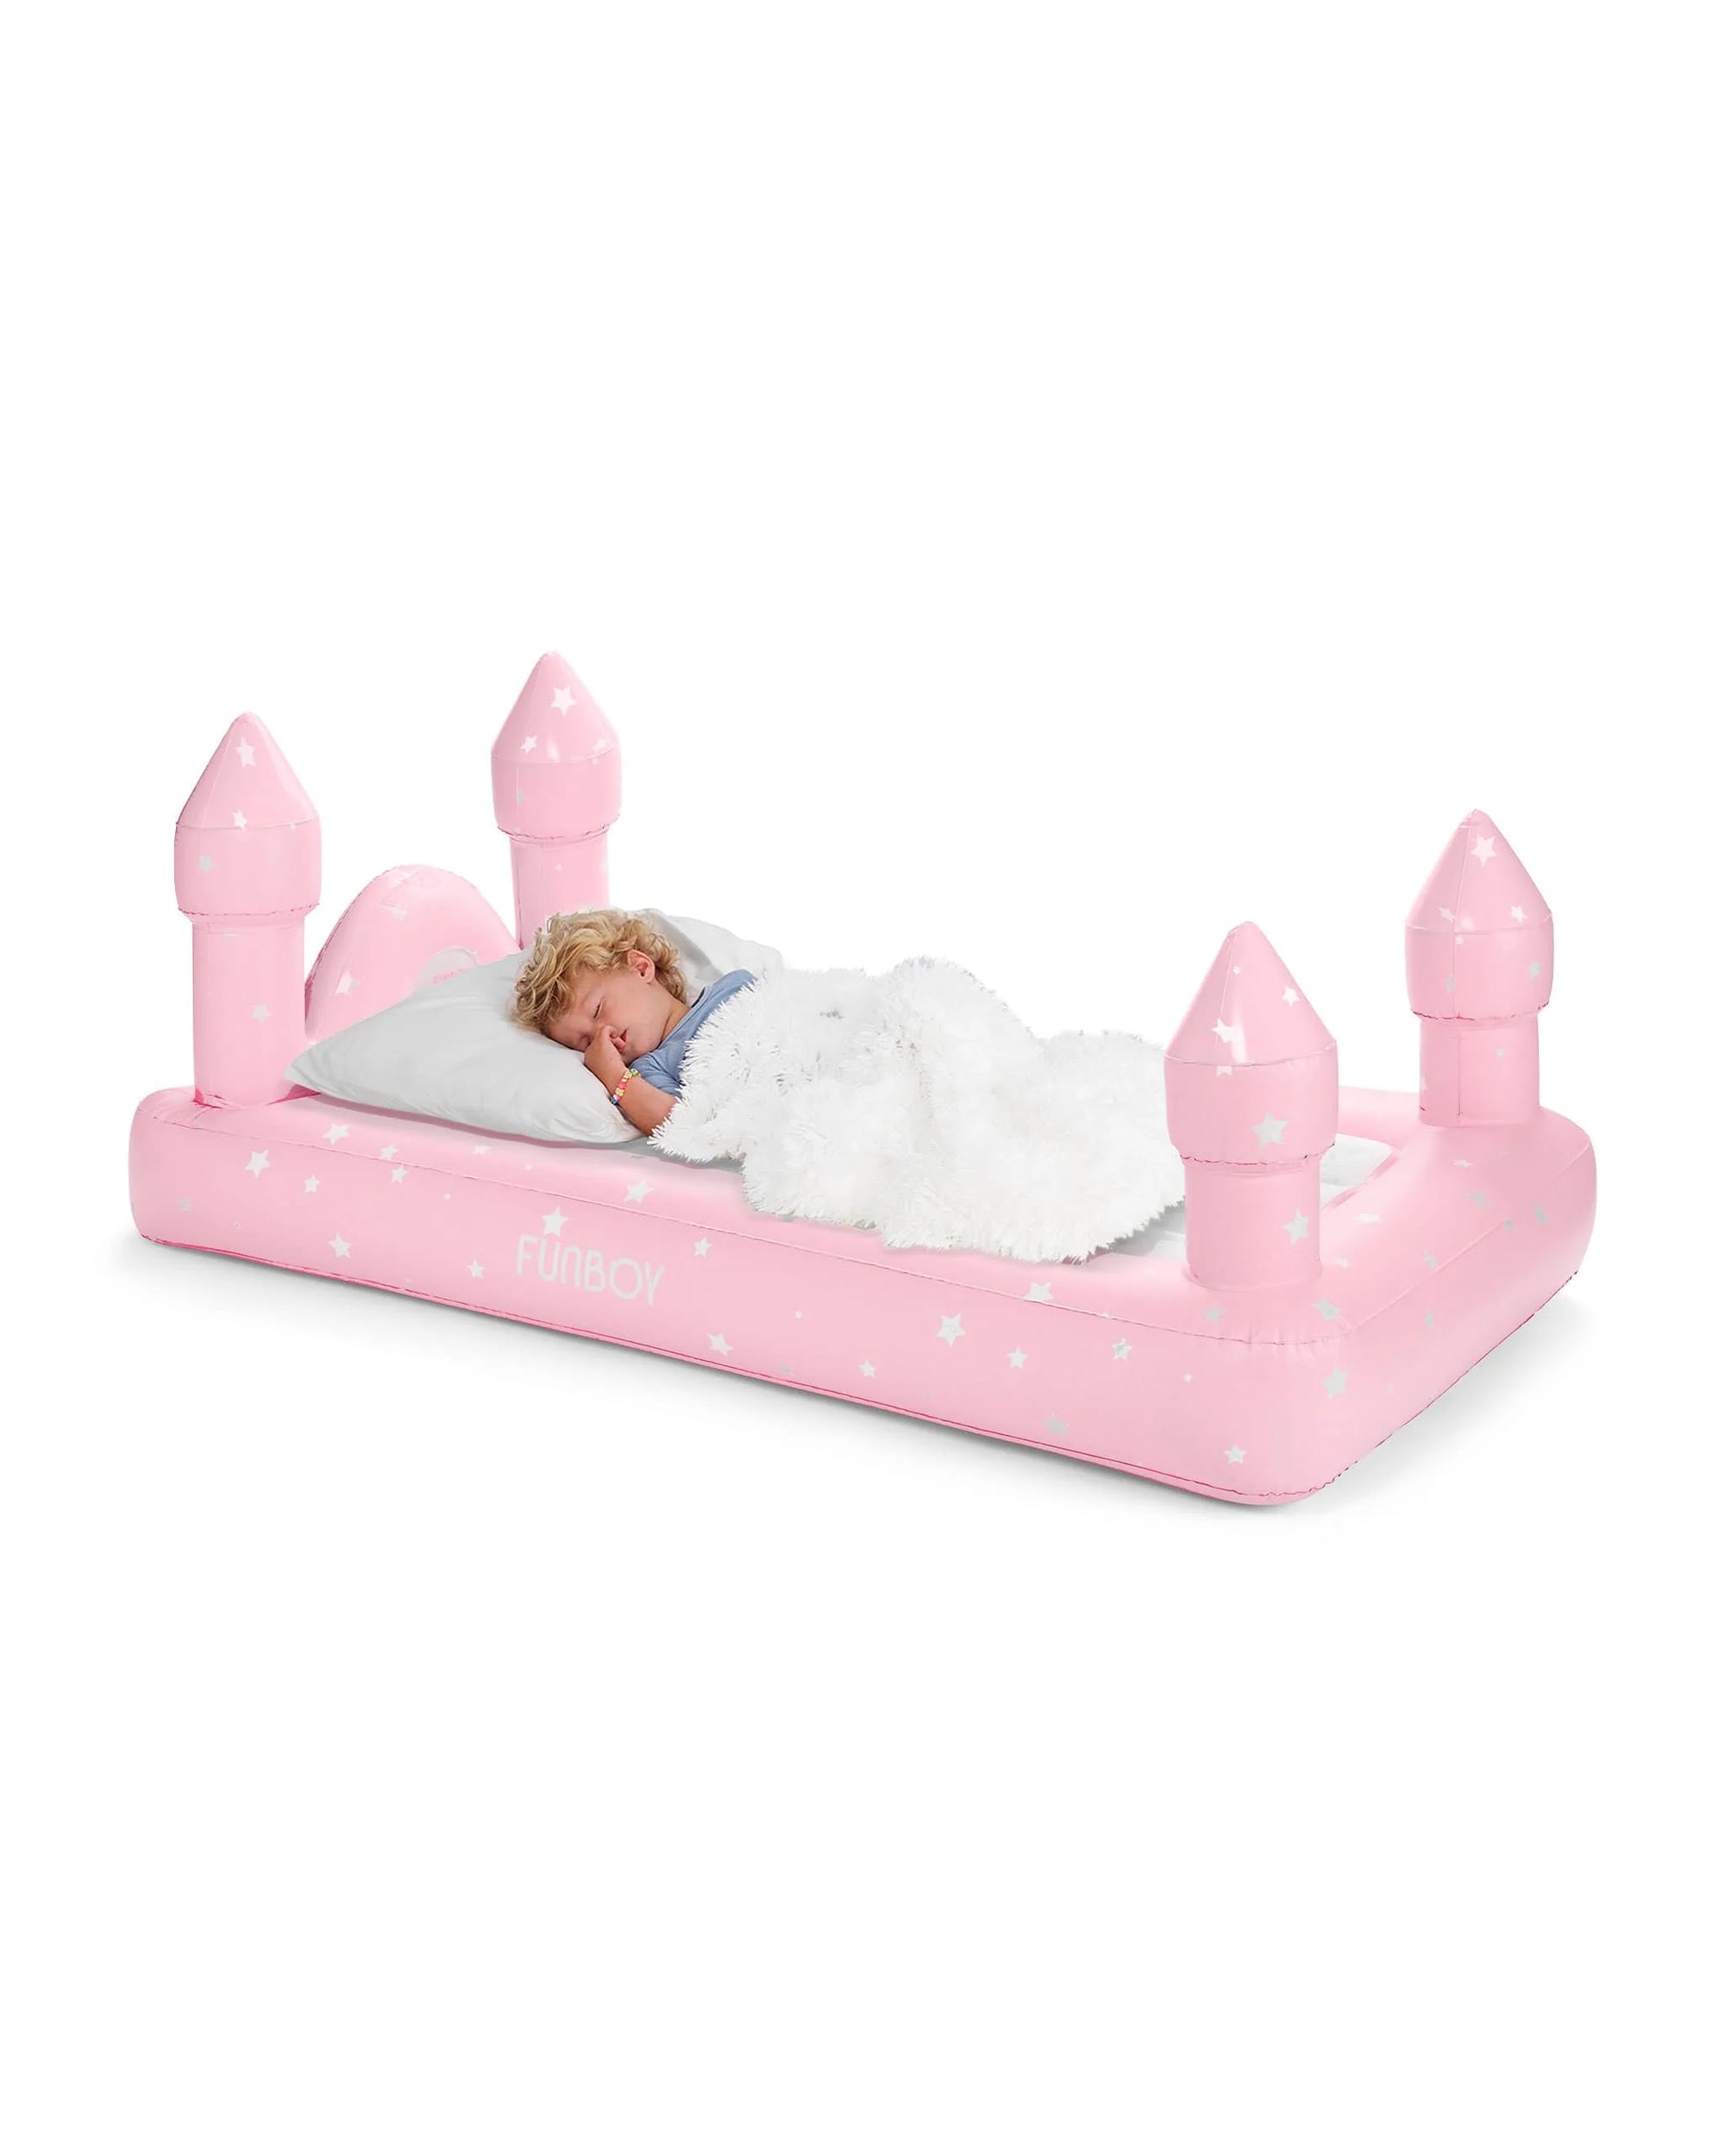 Pink Castle Sleepover Kids Air Mattress - The Preppy Bunny